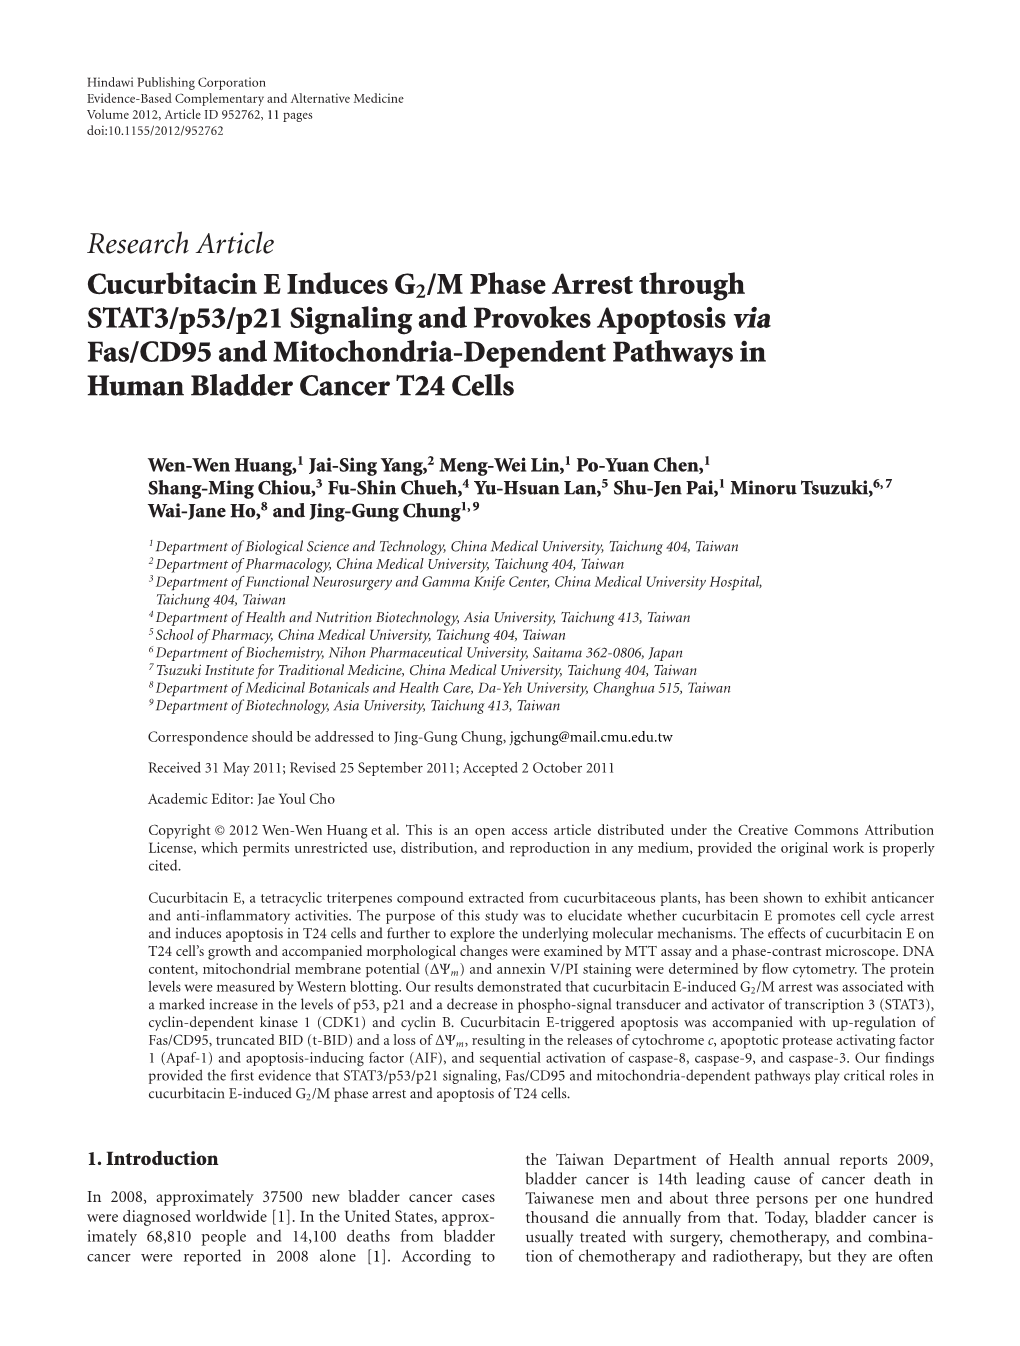 Research Article Cucurbitacin E Induces G2/M Phase